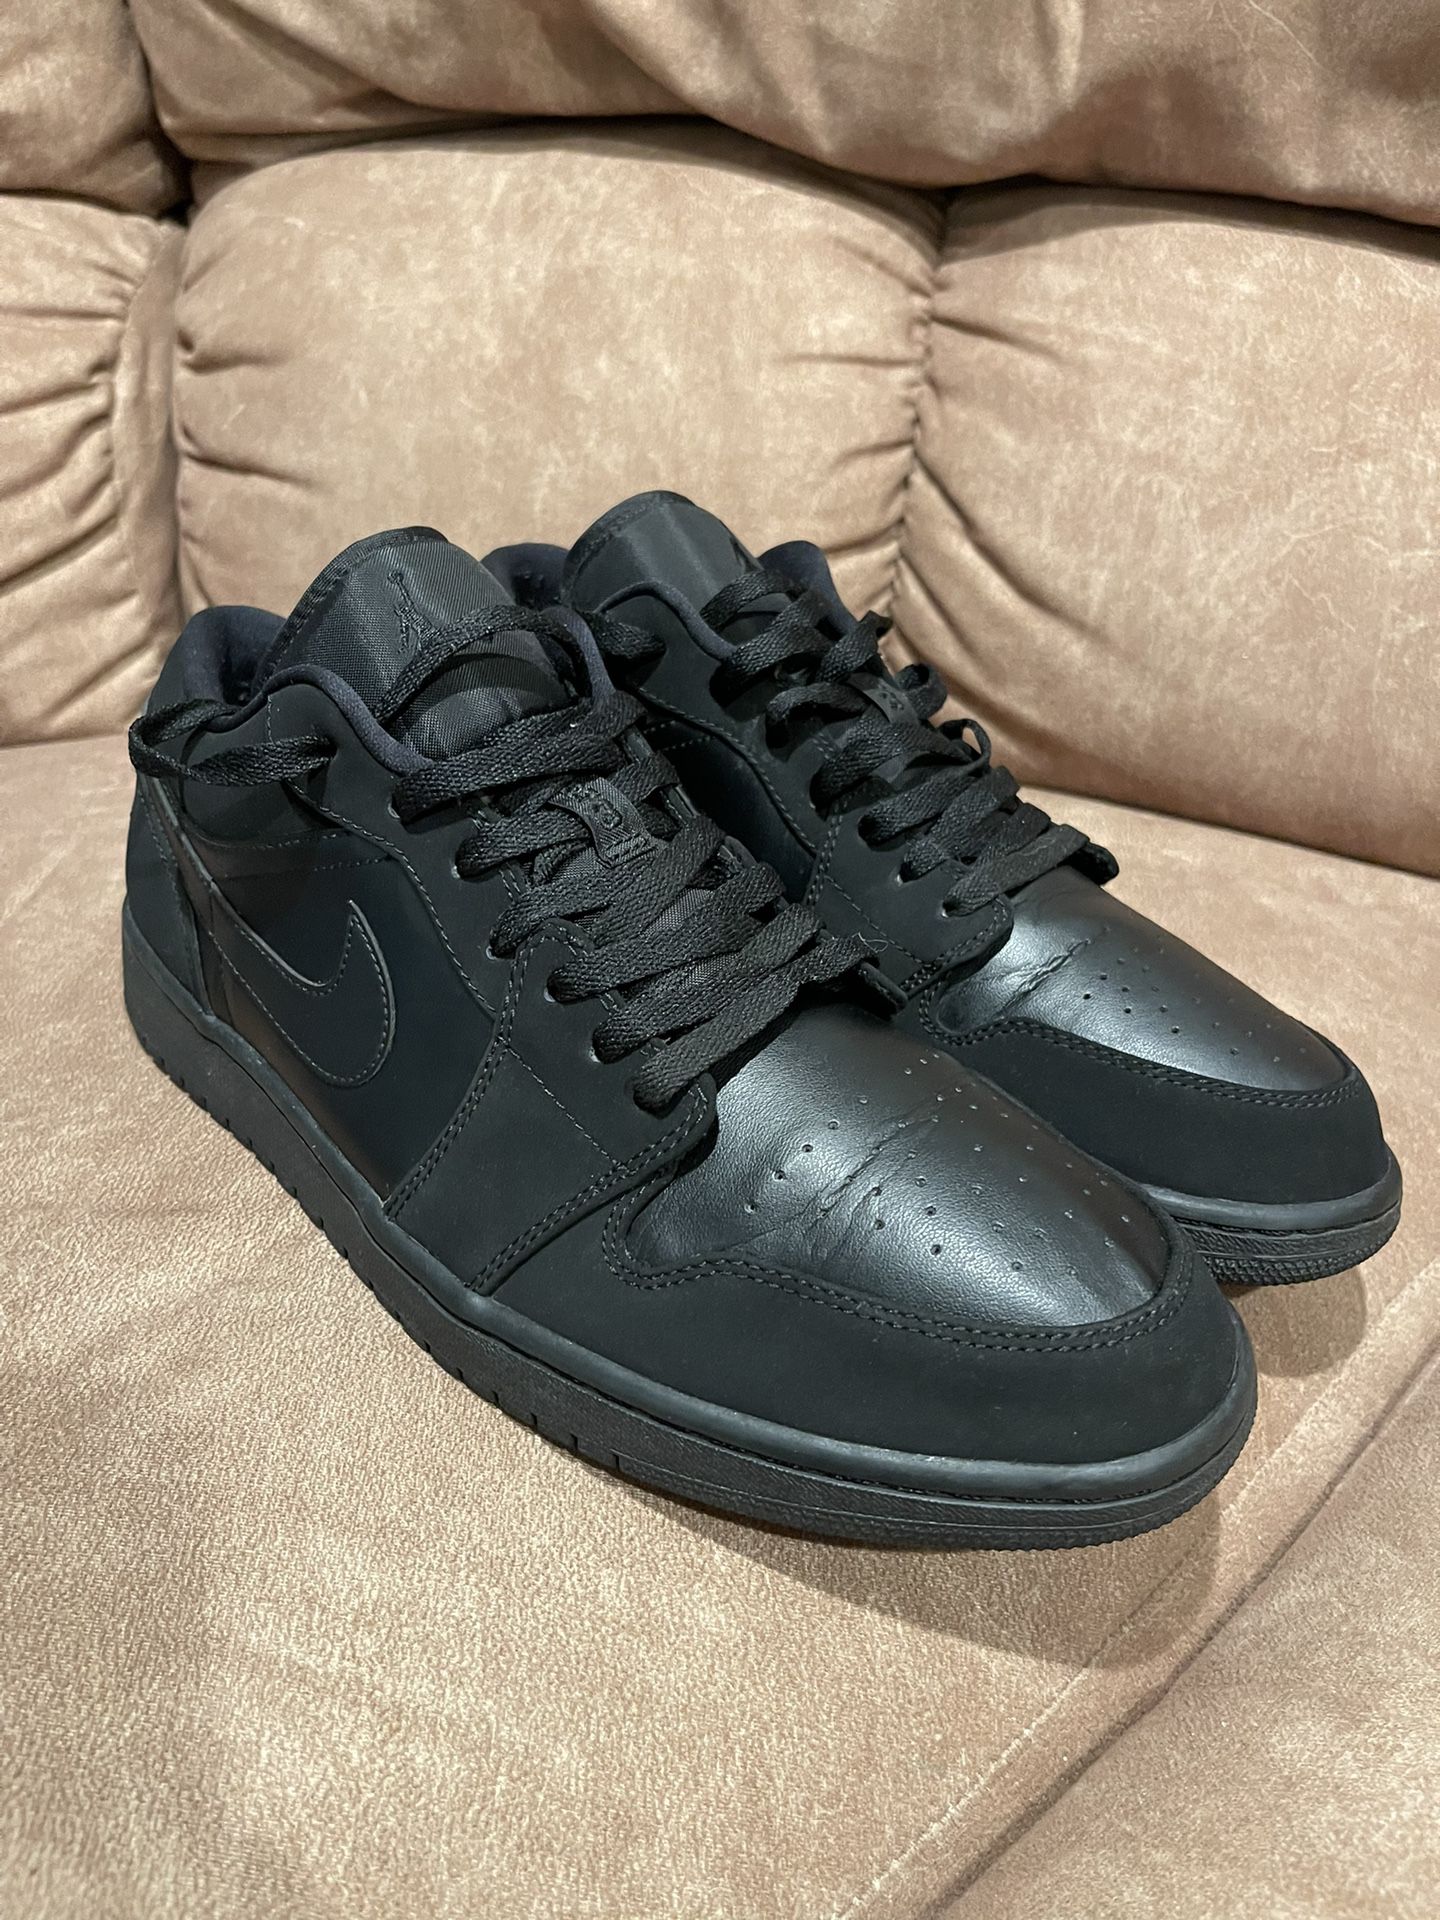 Air Jordan 1 Retro Low 'Triple Black' shoes